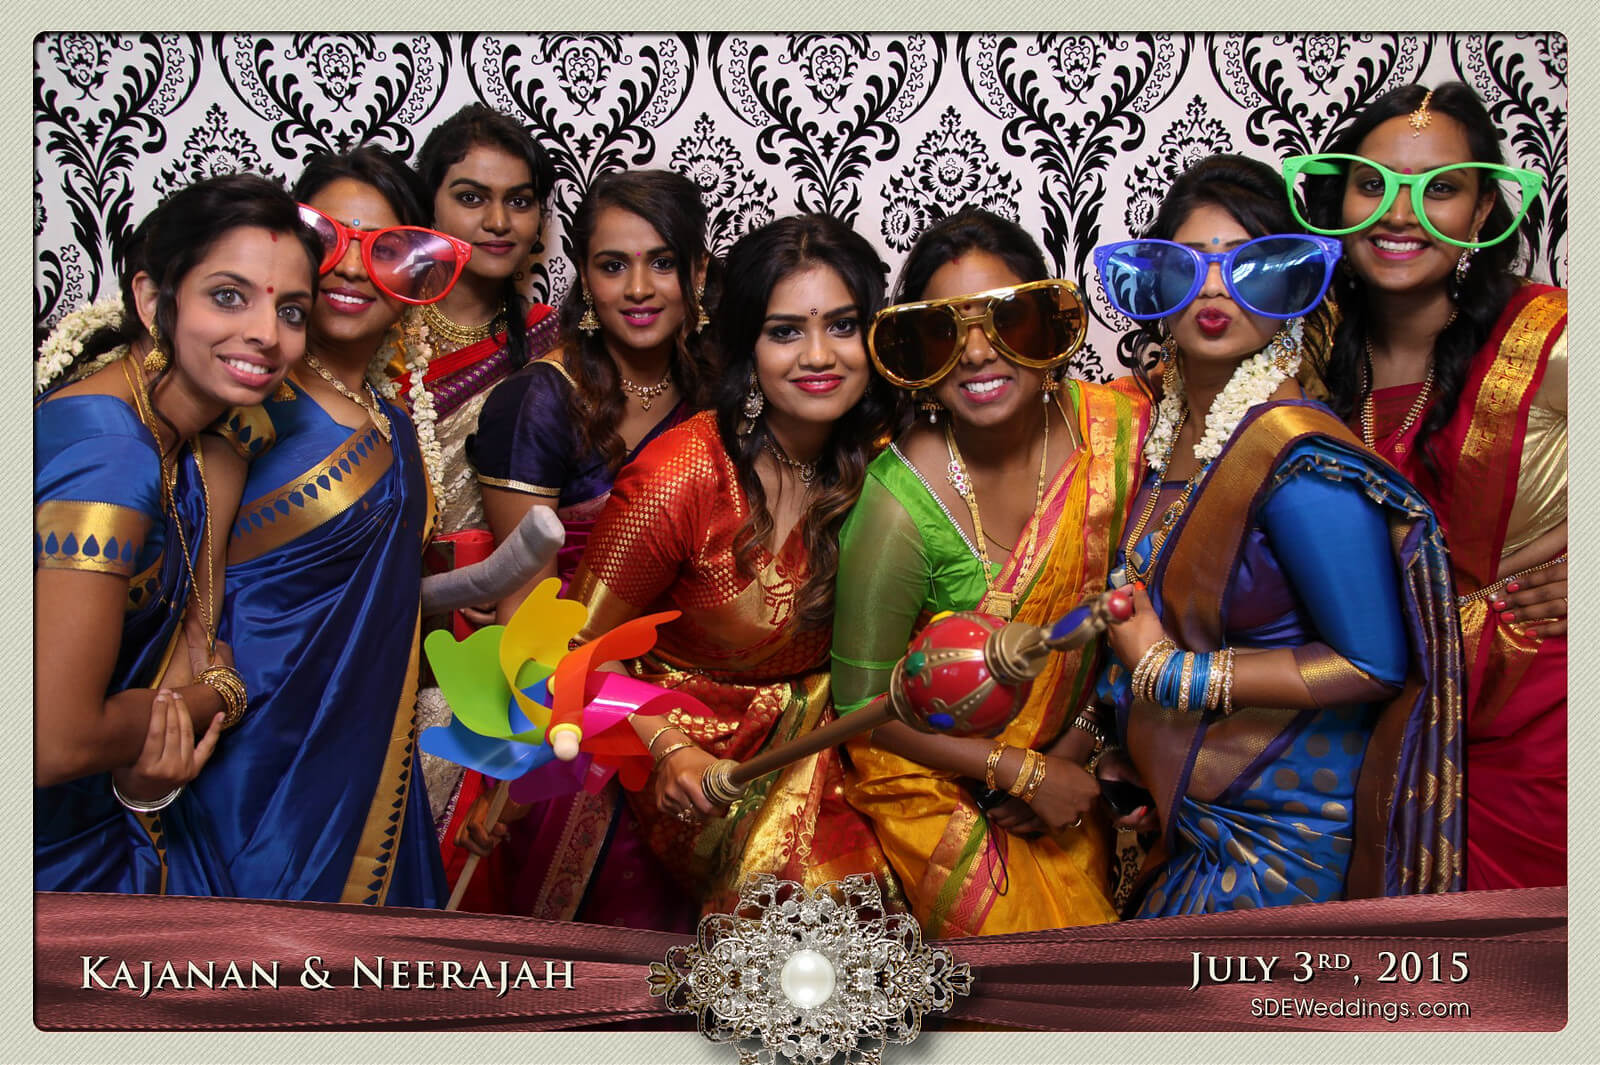 Toronto Scarborough Convention Centre Hindu Wedding Photo Booth Rental 5